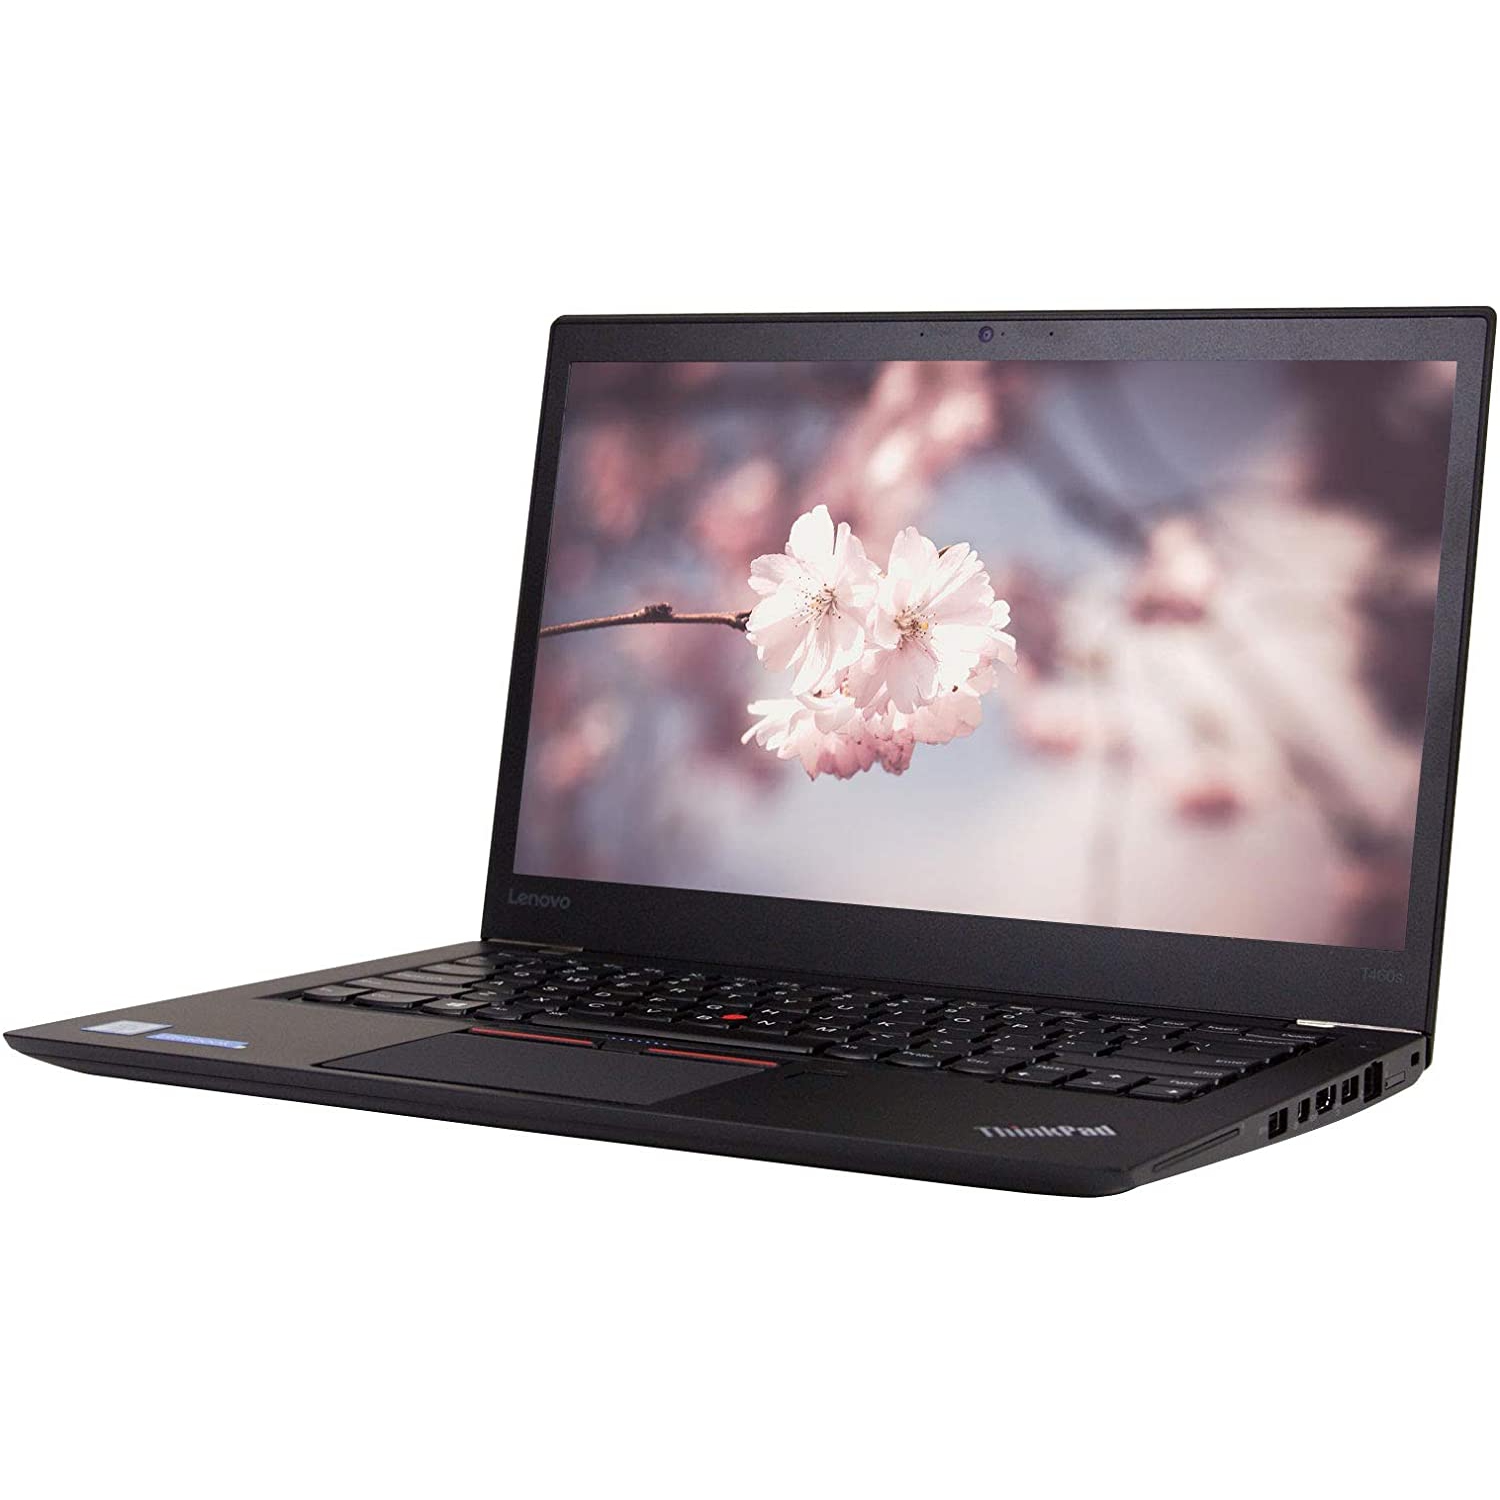 Refurbished (Good) - Lenovo ThinkPad T460s Slim Ultrabook 14" Laptop, Intel Core i7-6600U 2.6GHz, 16GB RAM, 256GB SSD, Windows 10 Pro.